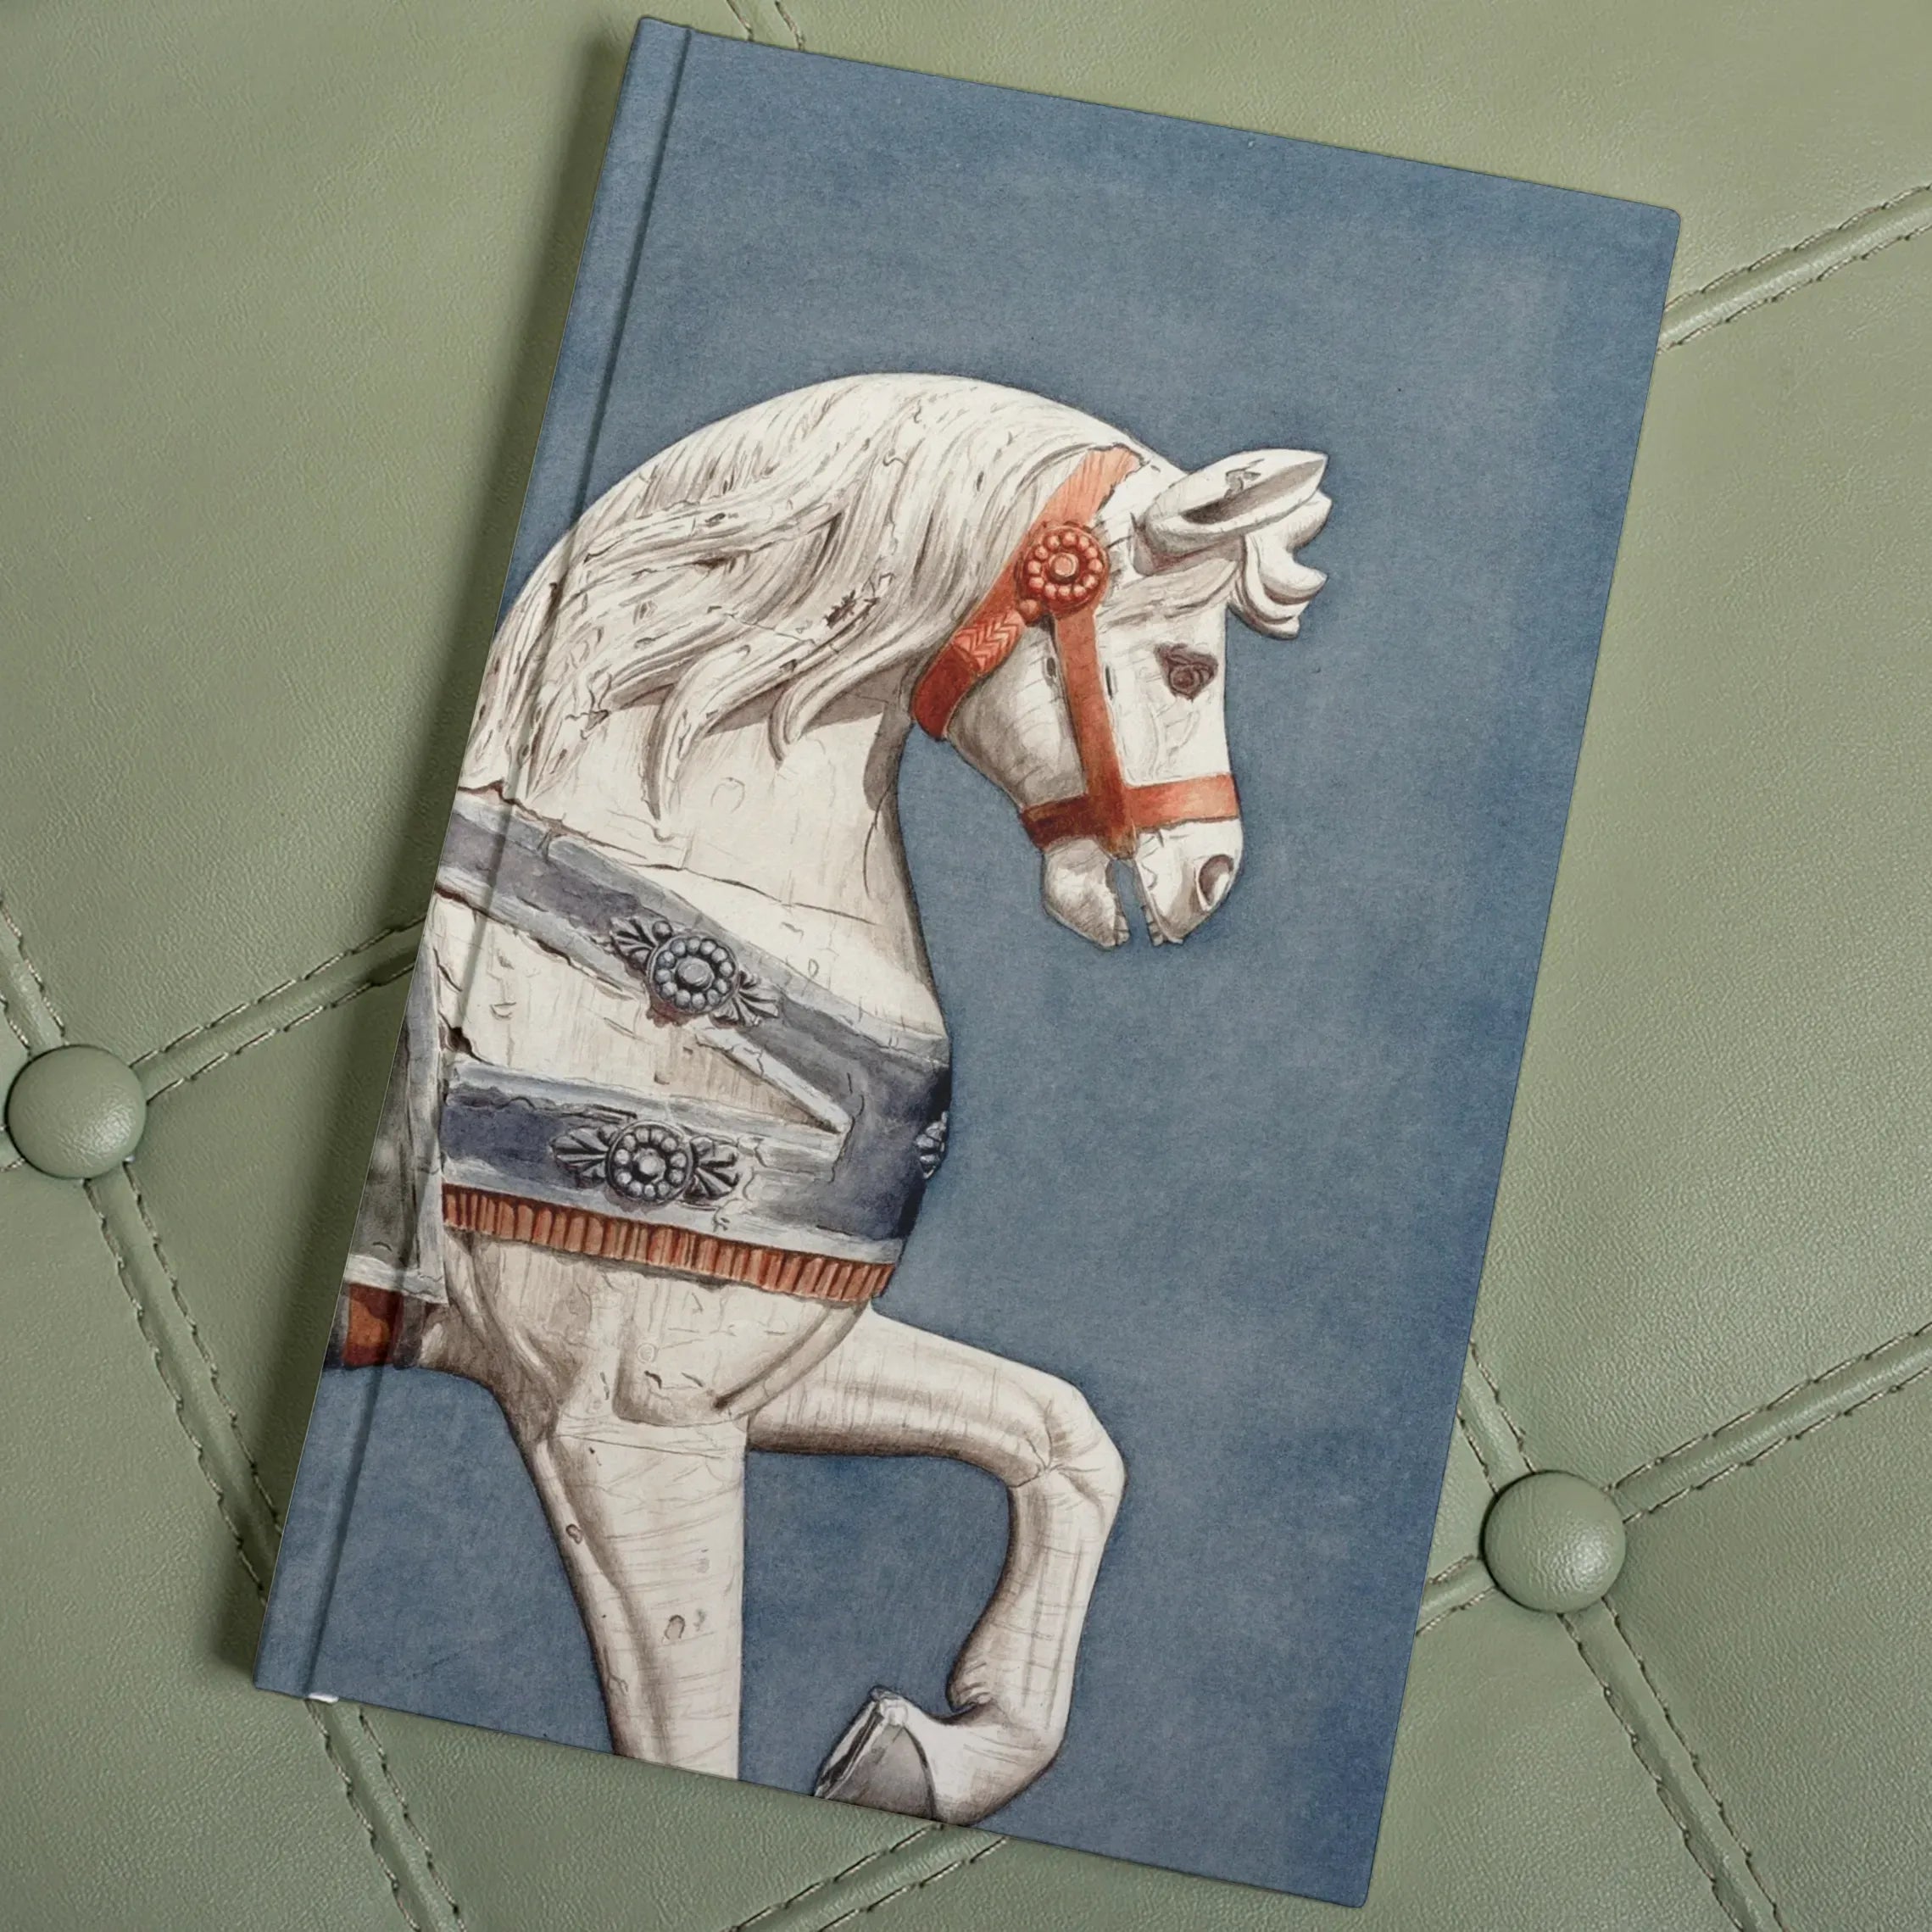 Carousel Horse By Henry Murphy Hardback Journal - Notebooks & Notepads - Aesthetic Art